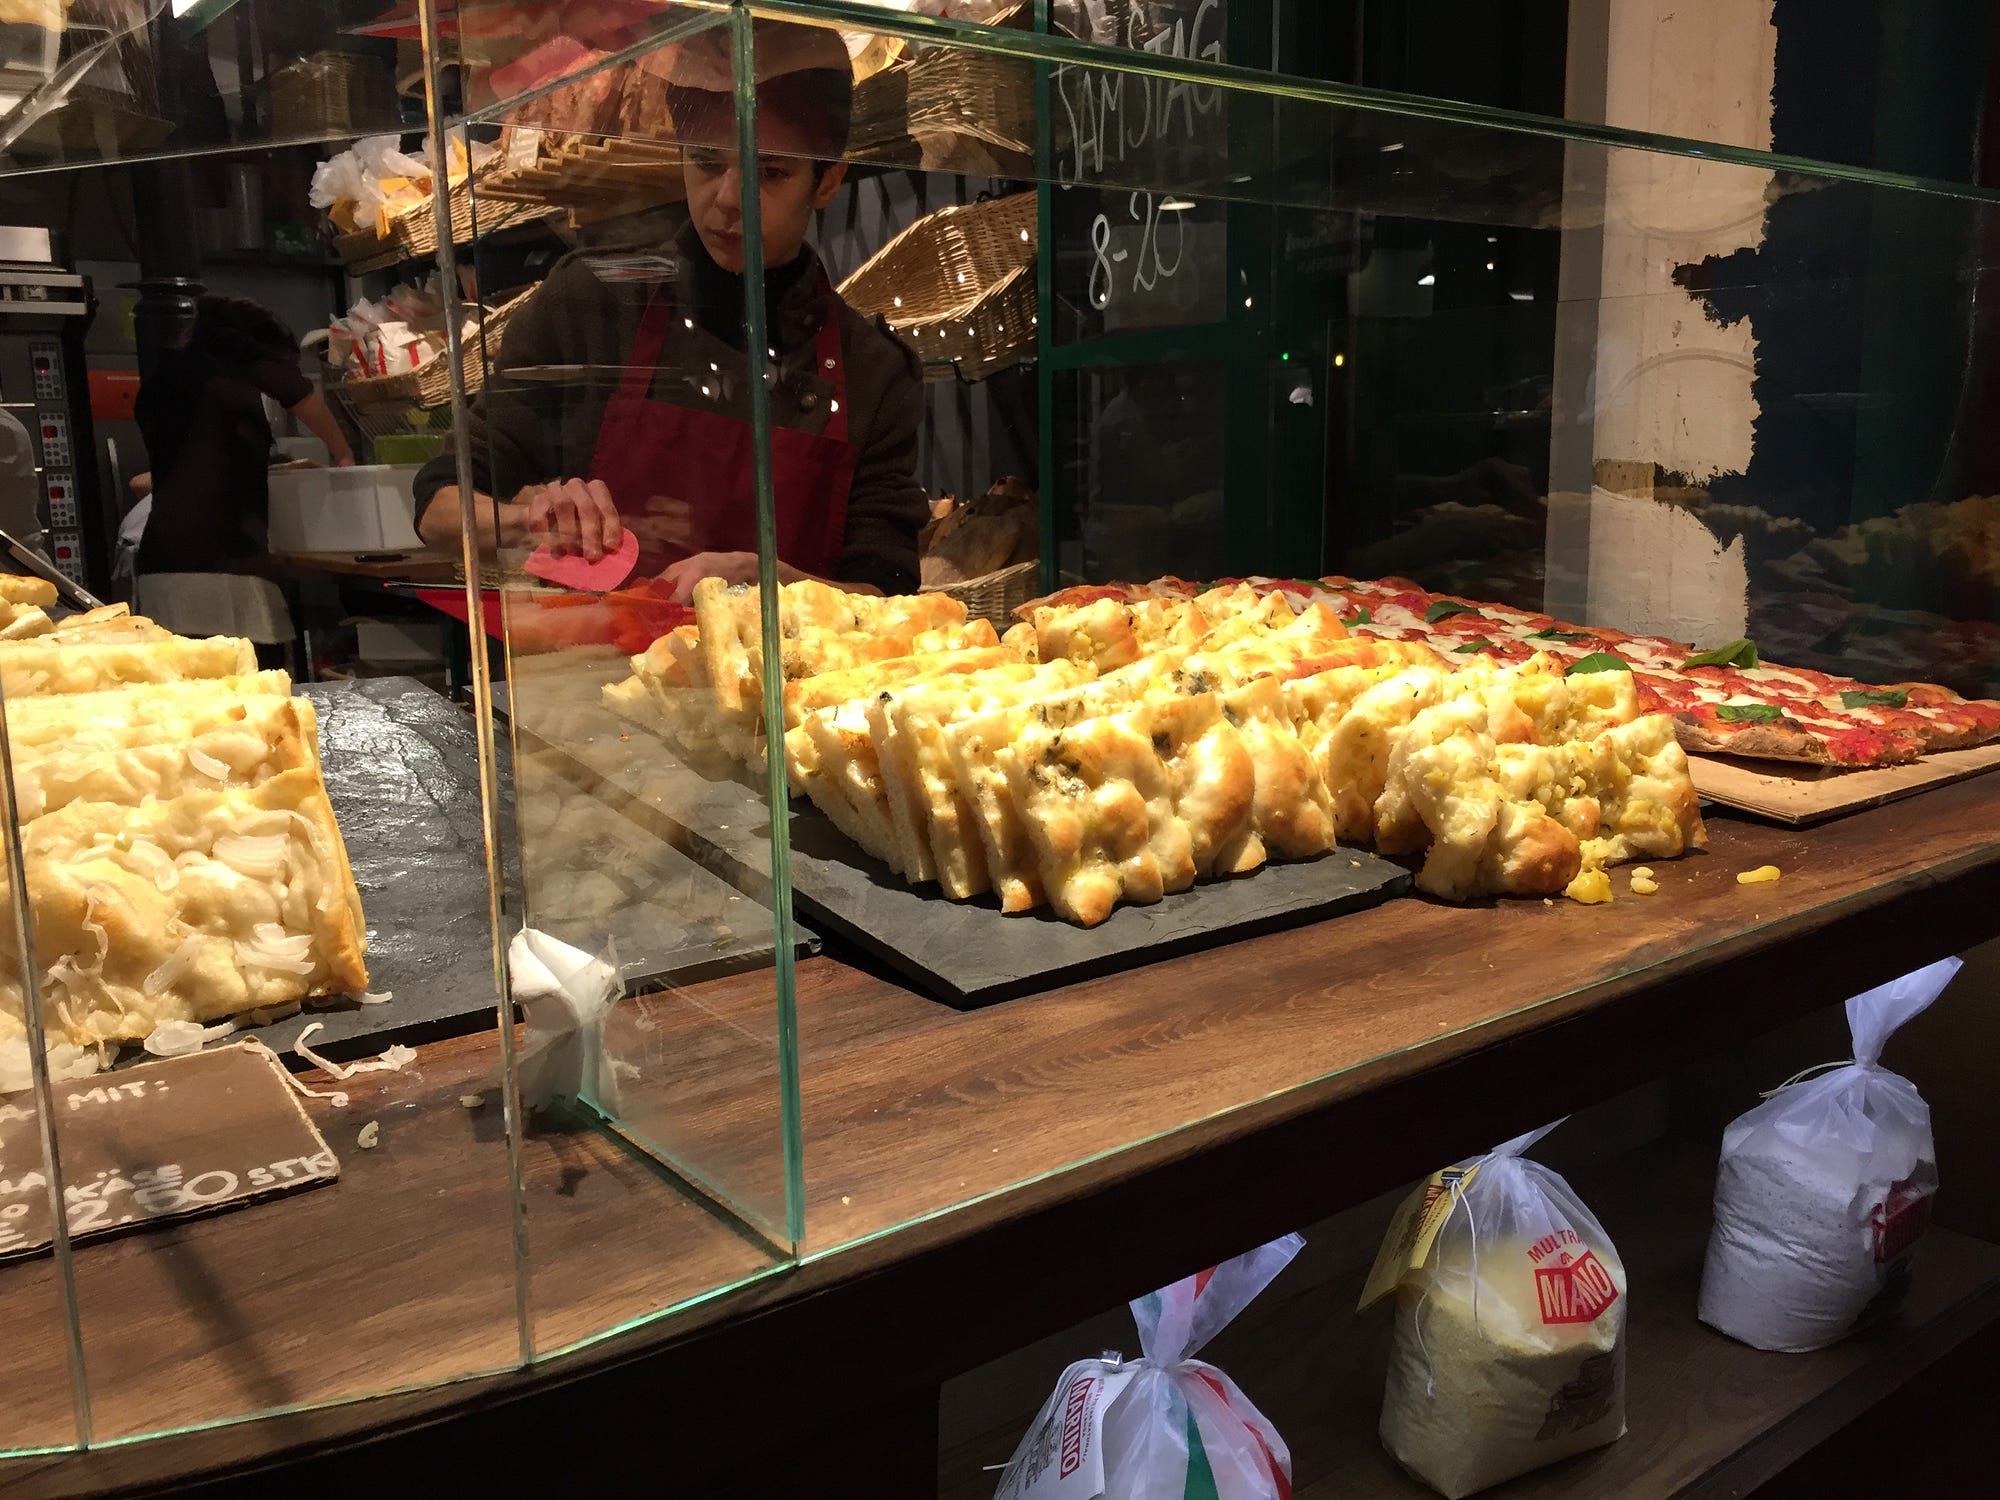 Italian bakery goodness on display, baked fresh inside the hall